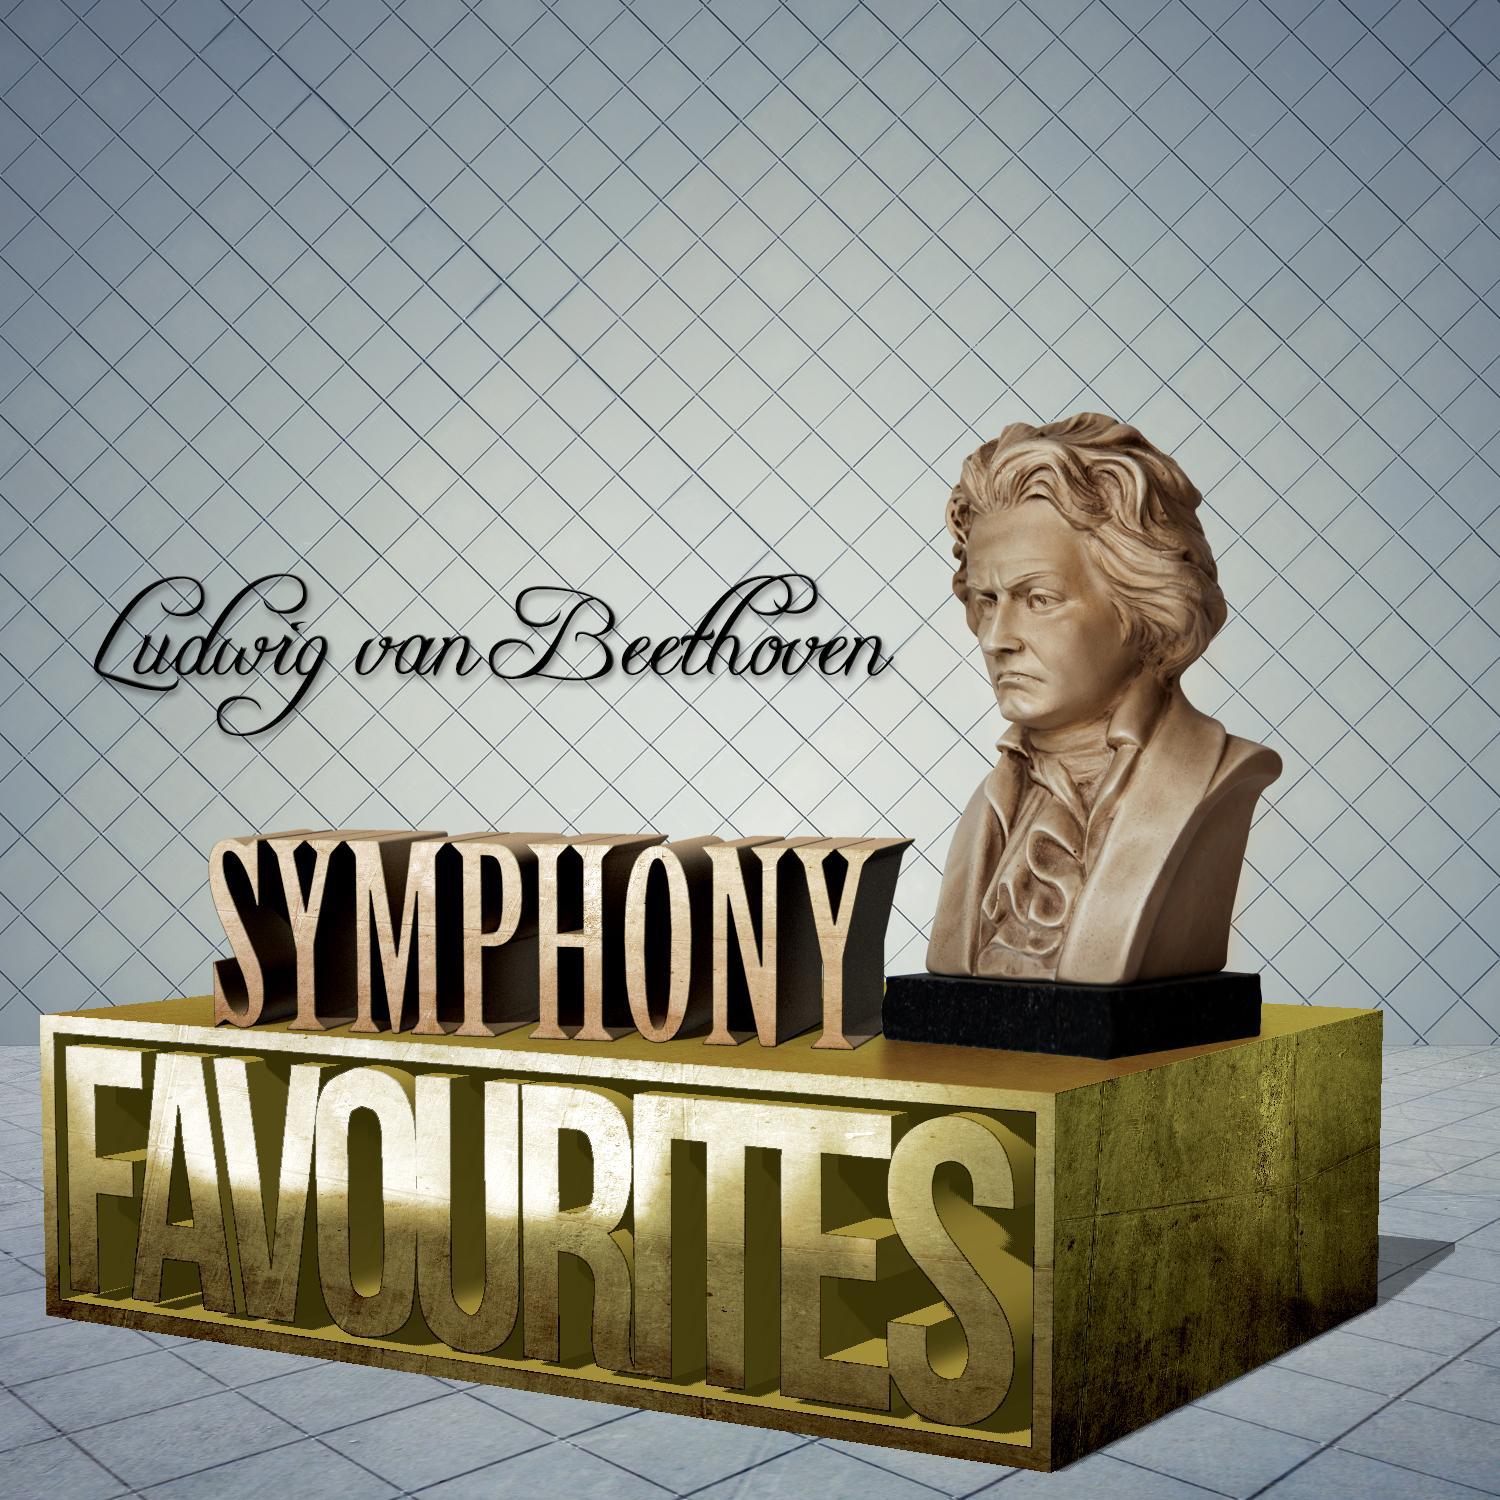 Ludwig van Beethoven: Symphony Favourites专辑